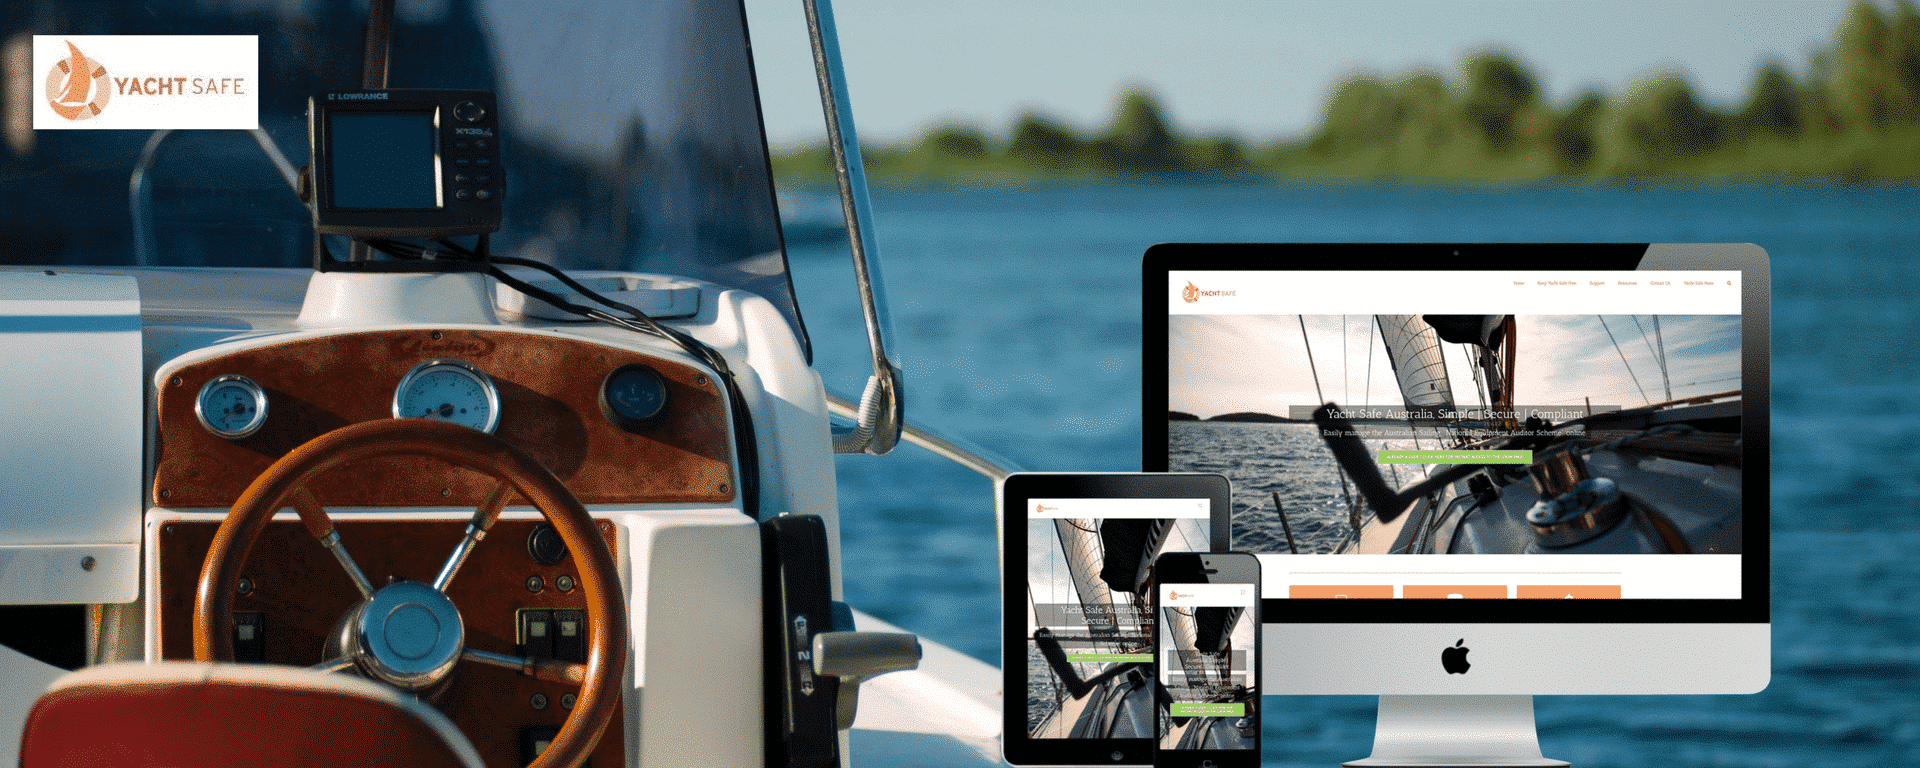 yacht safe web app